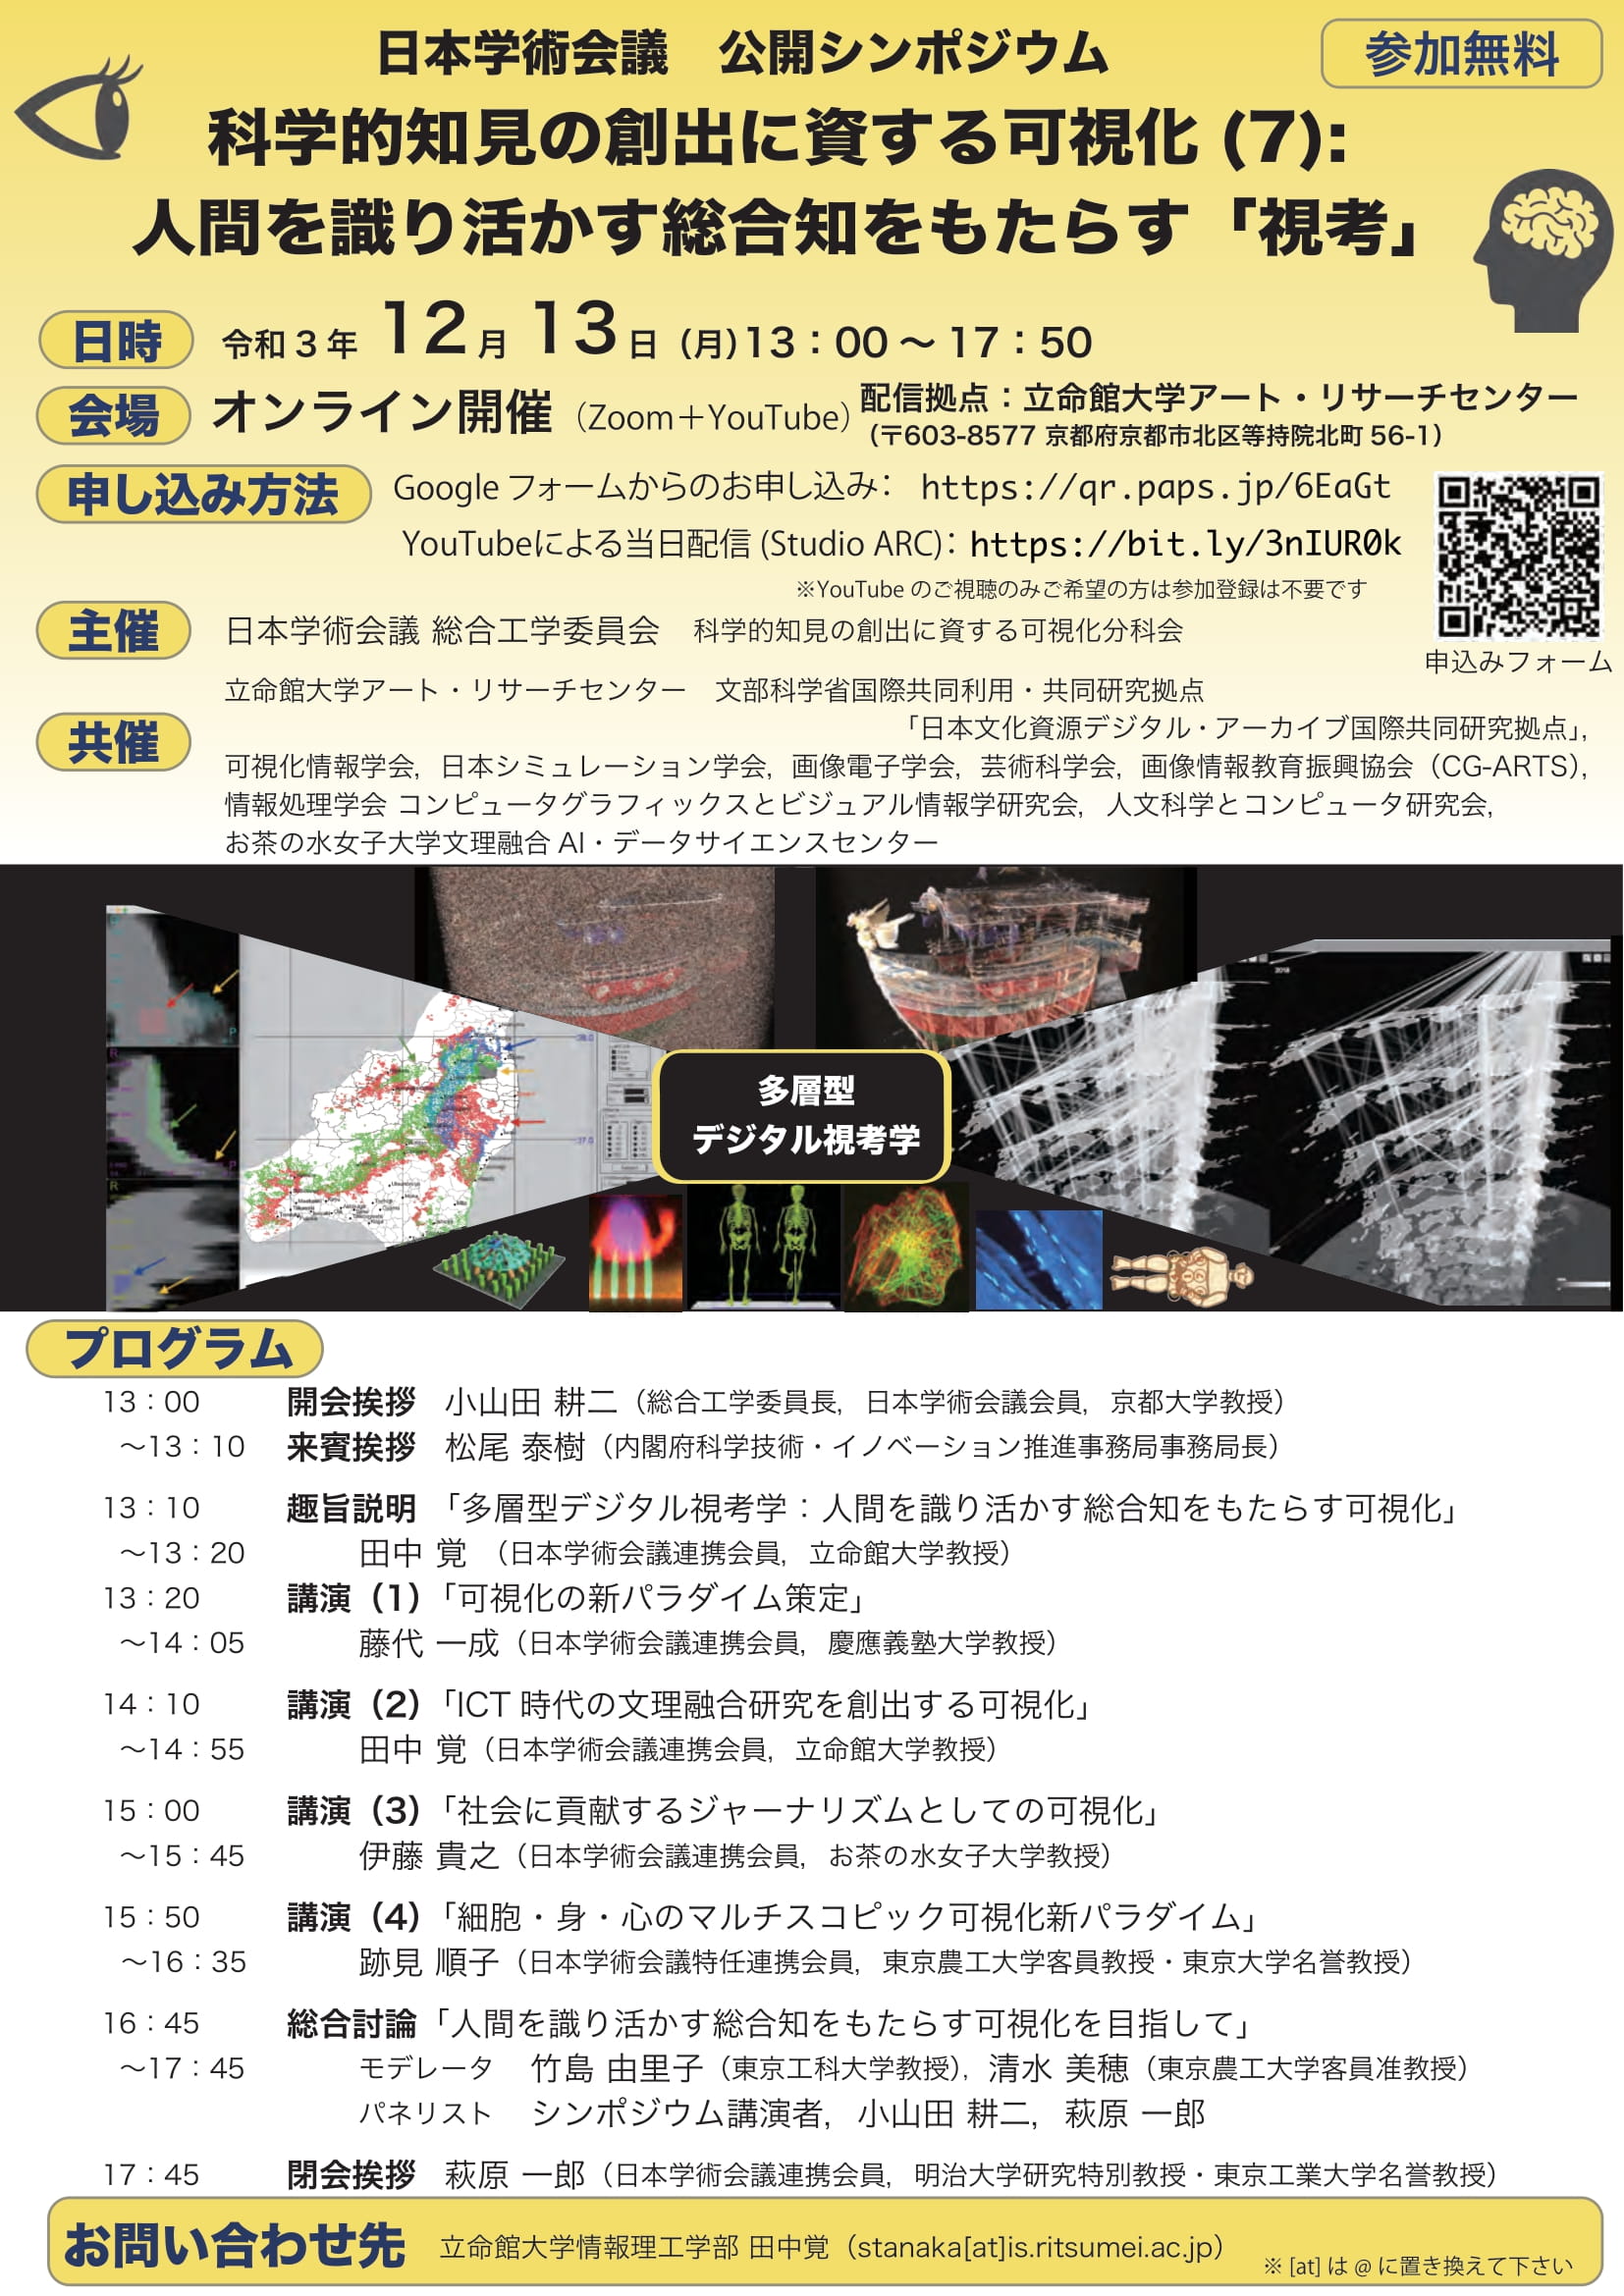 https://www.arc.ritsumei.ac.jp/lib/app/newarc/news/2021_sympo07_poster_ver3.4d-1.jpg